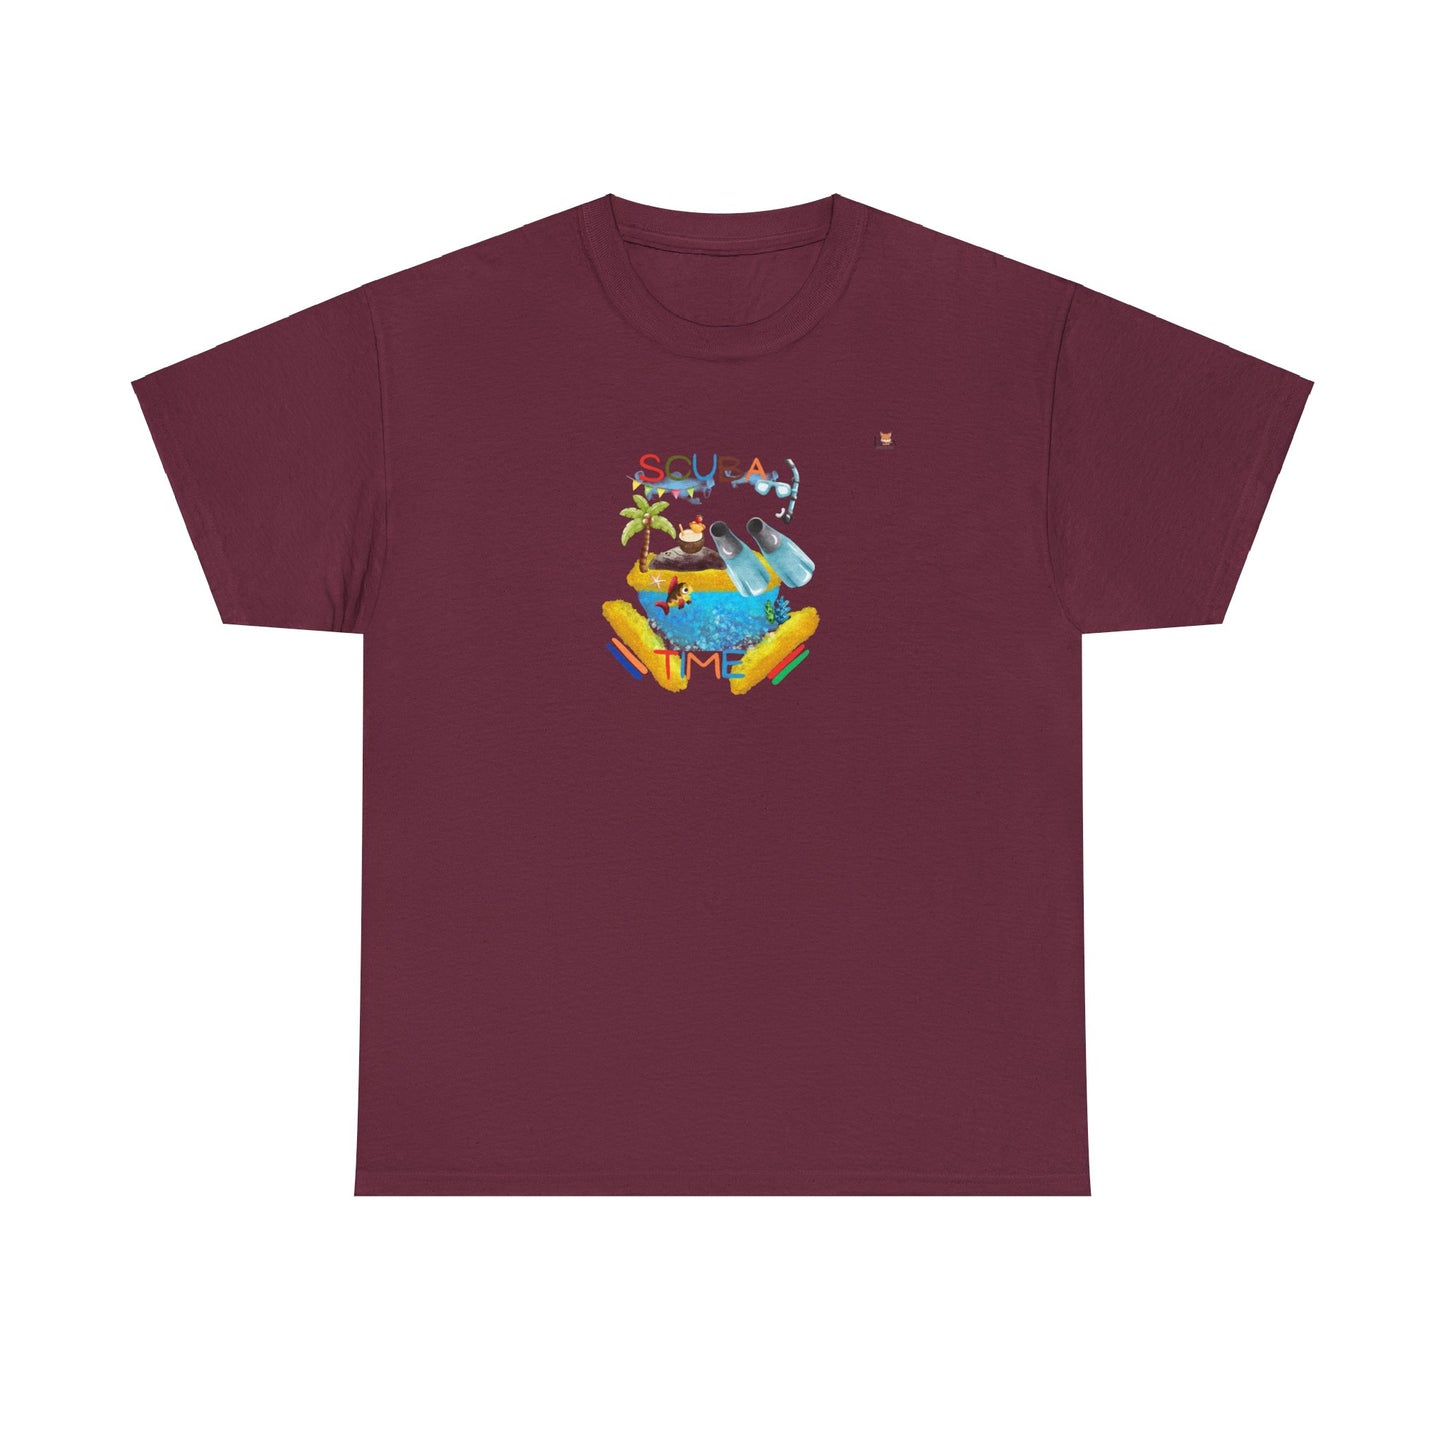 Scuba Diving Good Time- T-Shirt